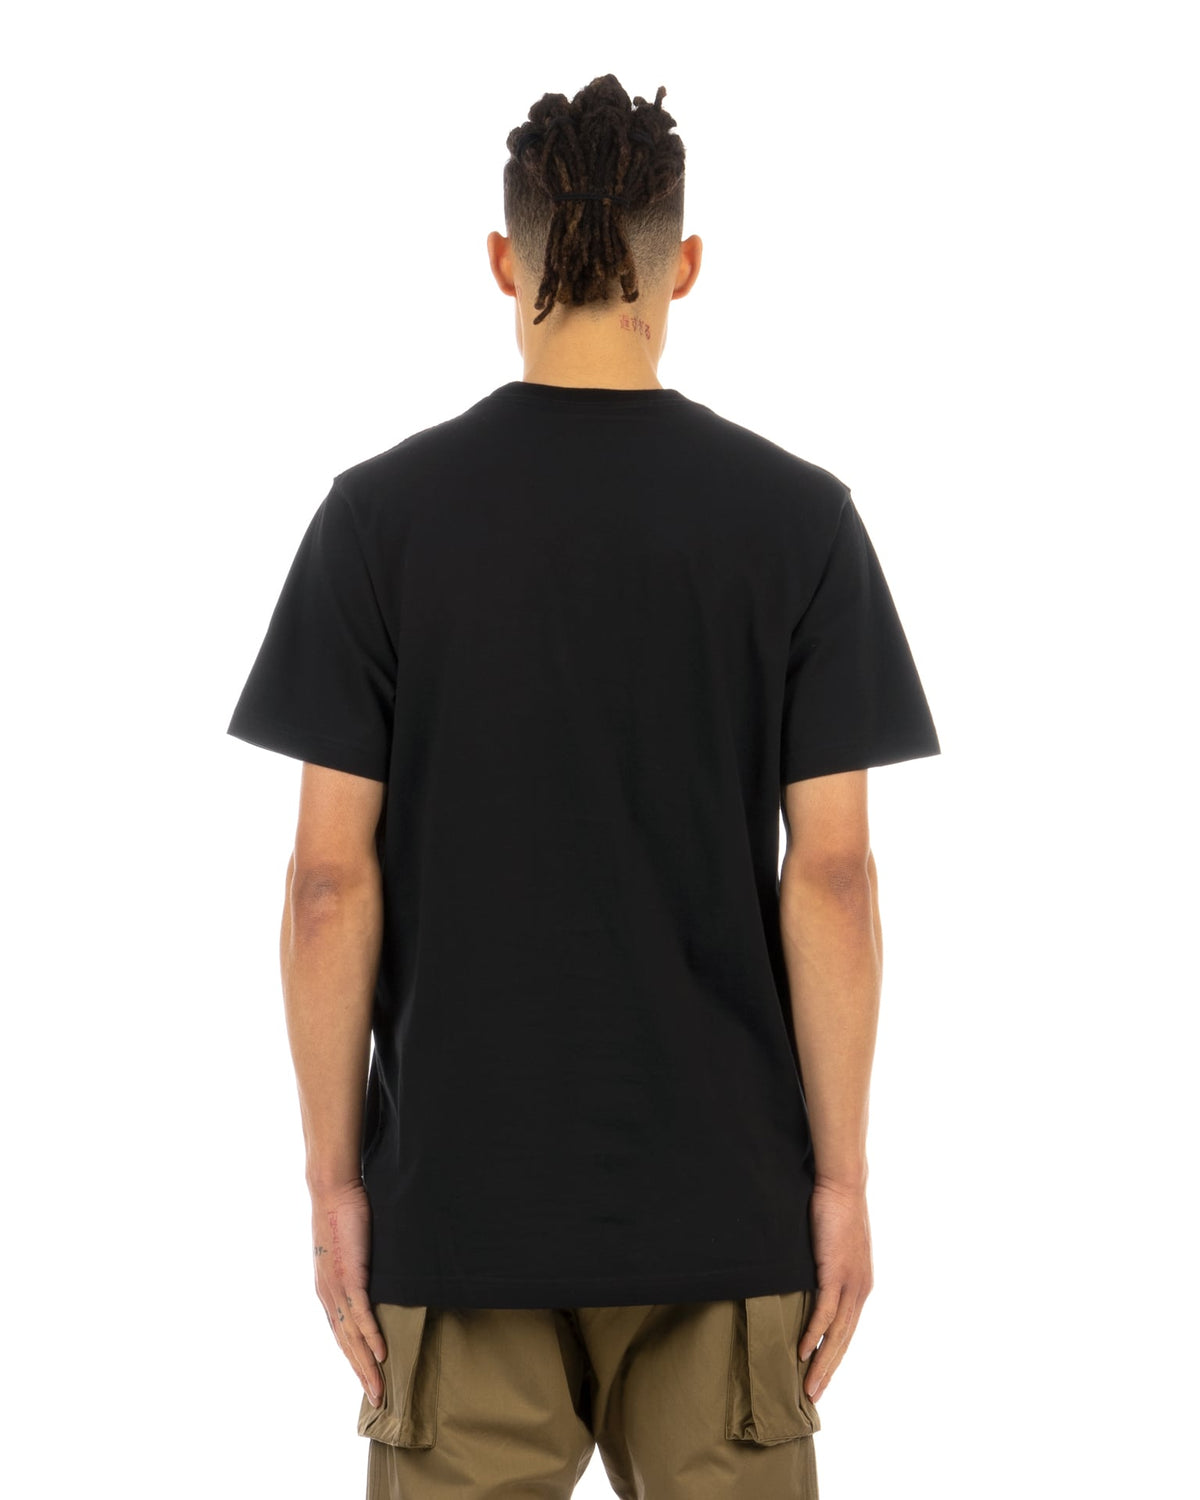 maharishi | Warhol DPM Series 3 T-Shirt Black 9646 - Concrete